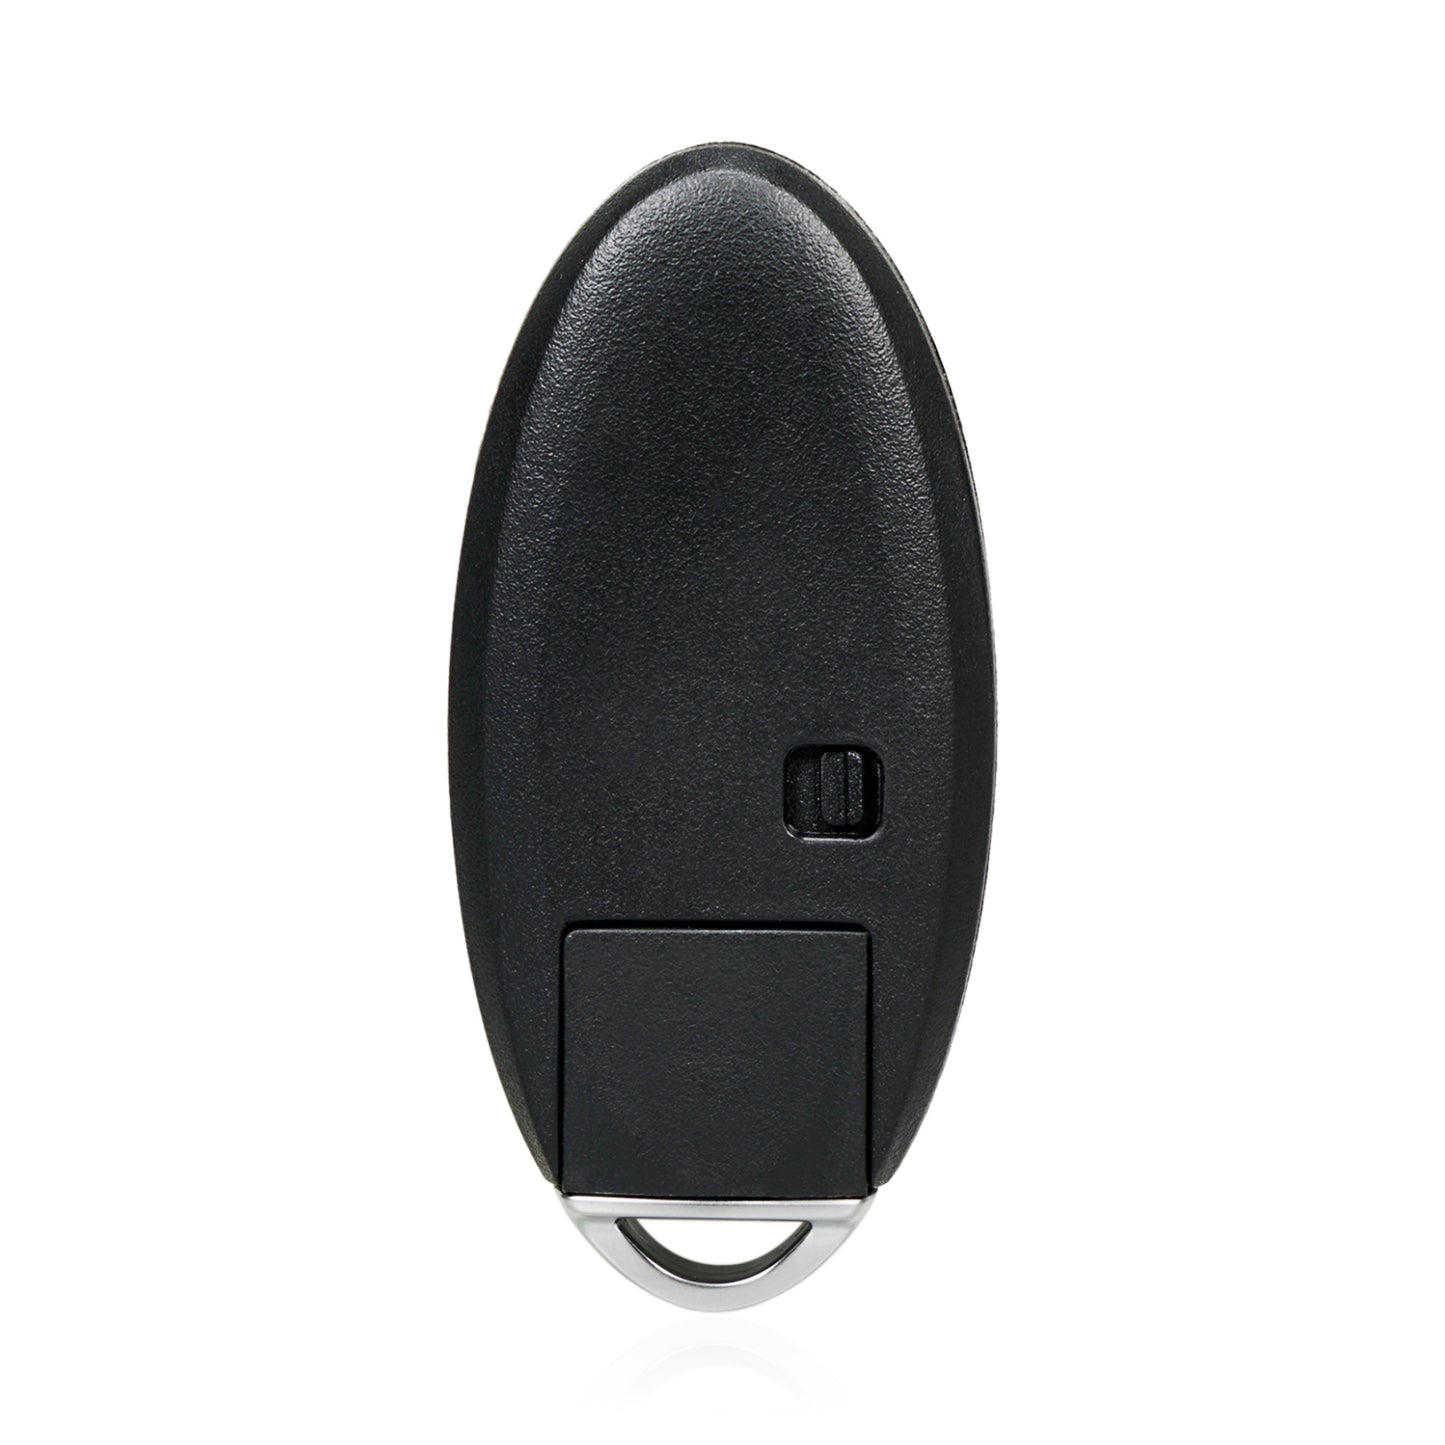 4 Buttons 434MHz Fob Entry Car Remote Key For 2019-2020 Nissan Murano Pathfinder Titan FCC ID : KR5TXN7 SKU : H700